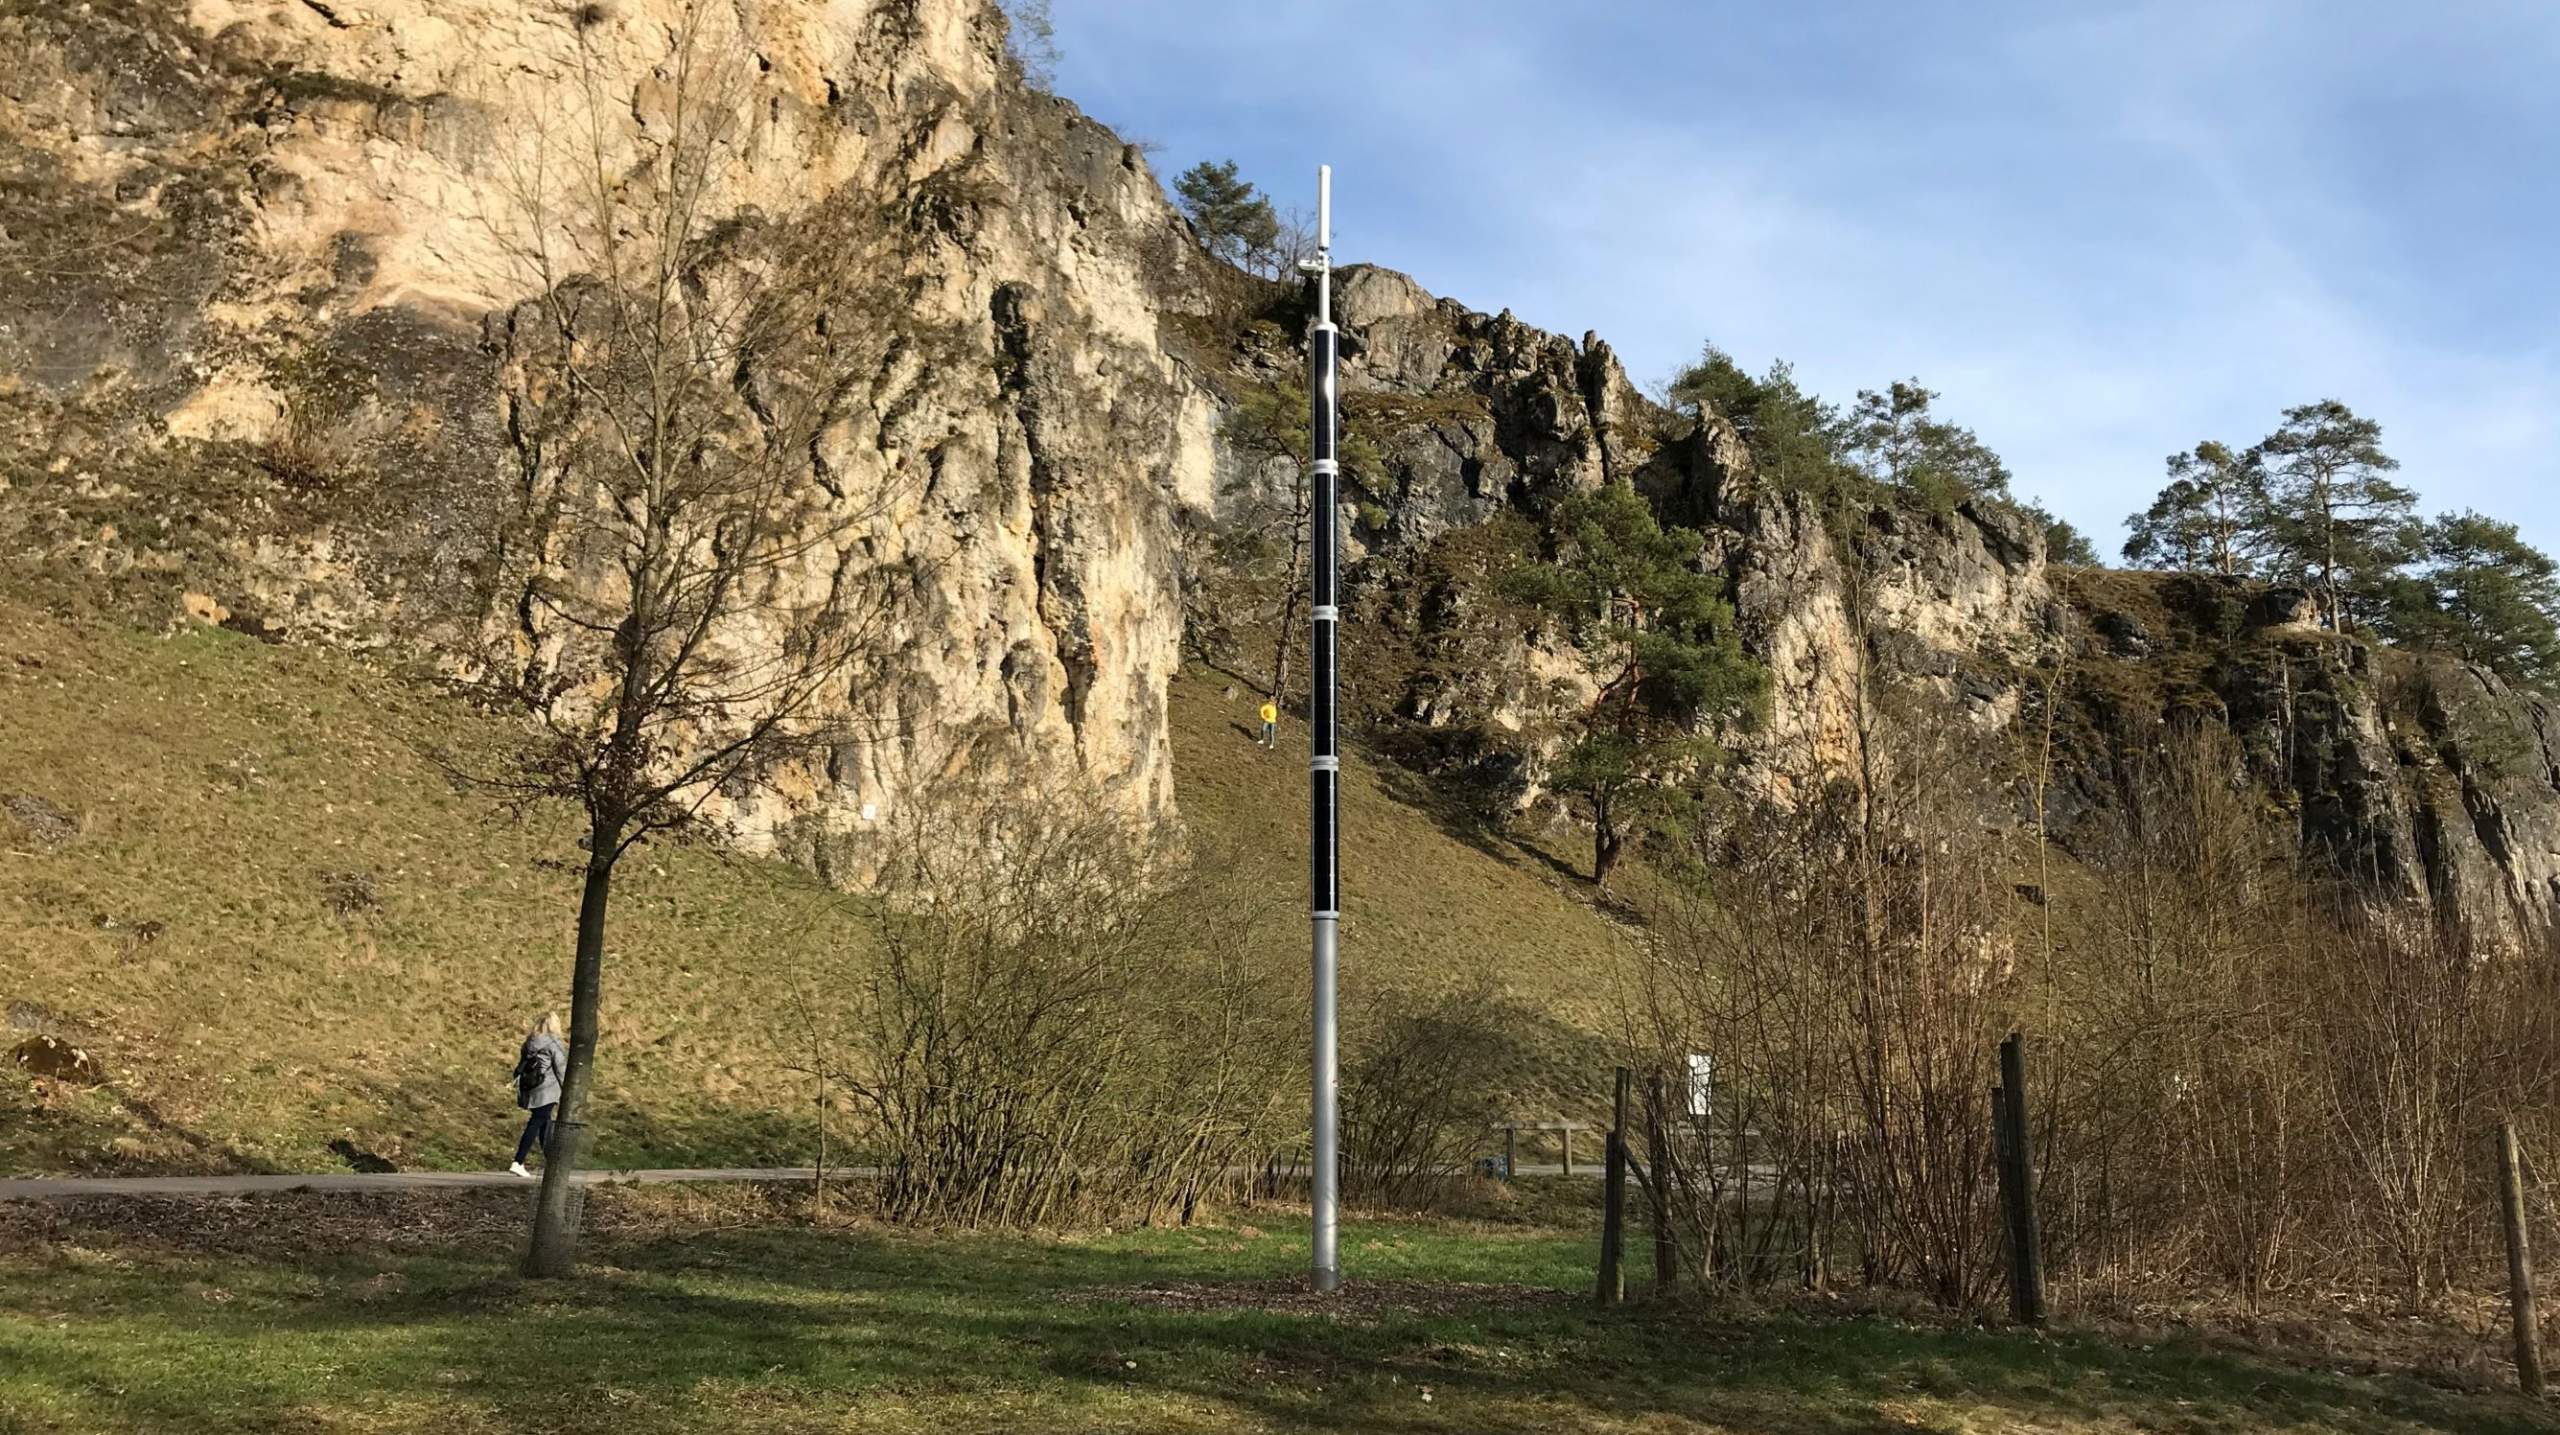 Soluxio Connect verzorgt gratis WiFi op zonne-energie in klimgebied in Duitsland